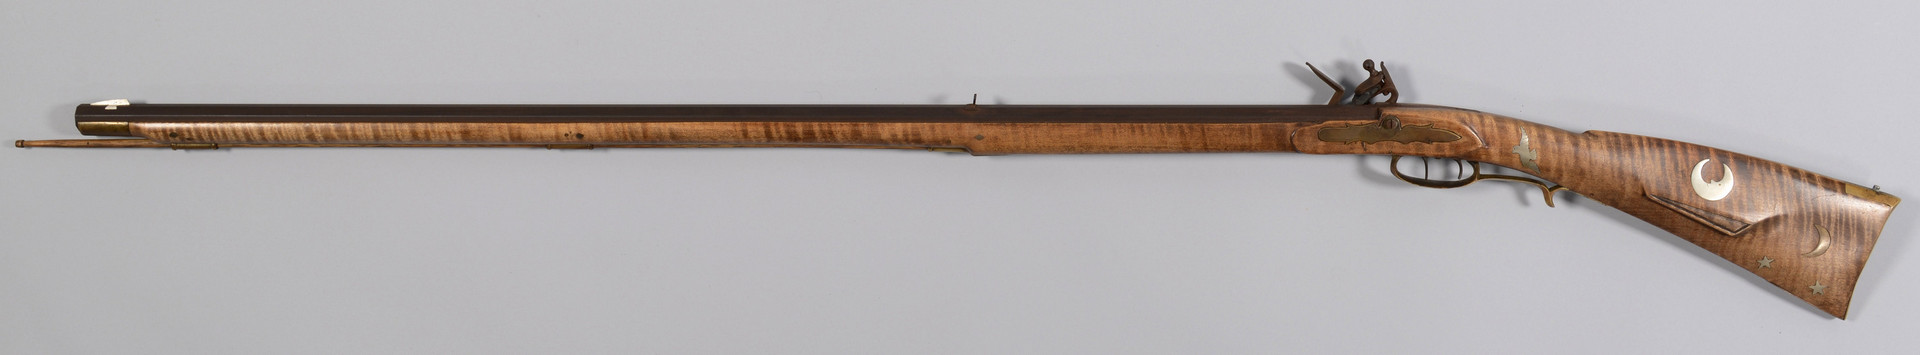 Lot 717: Two (2) Flintlock Long Rifles, Contemporary